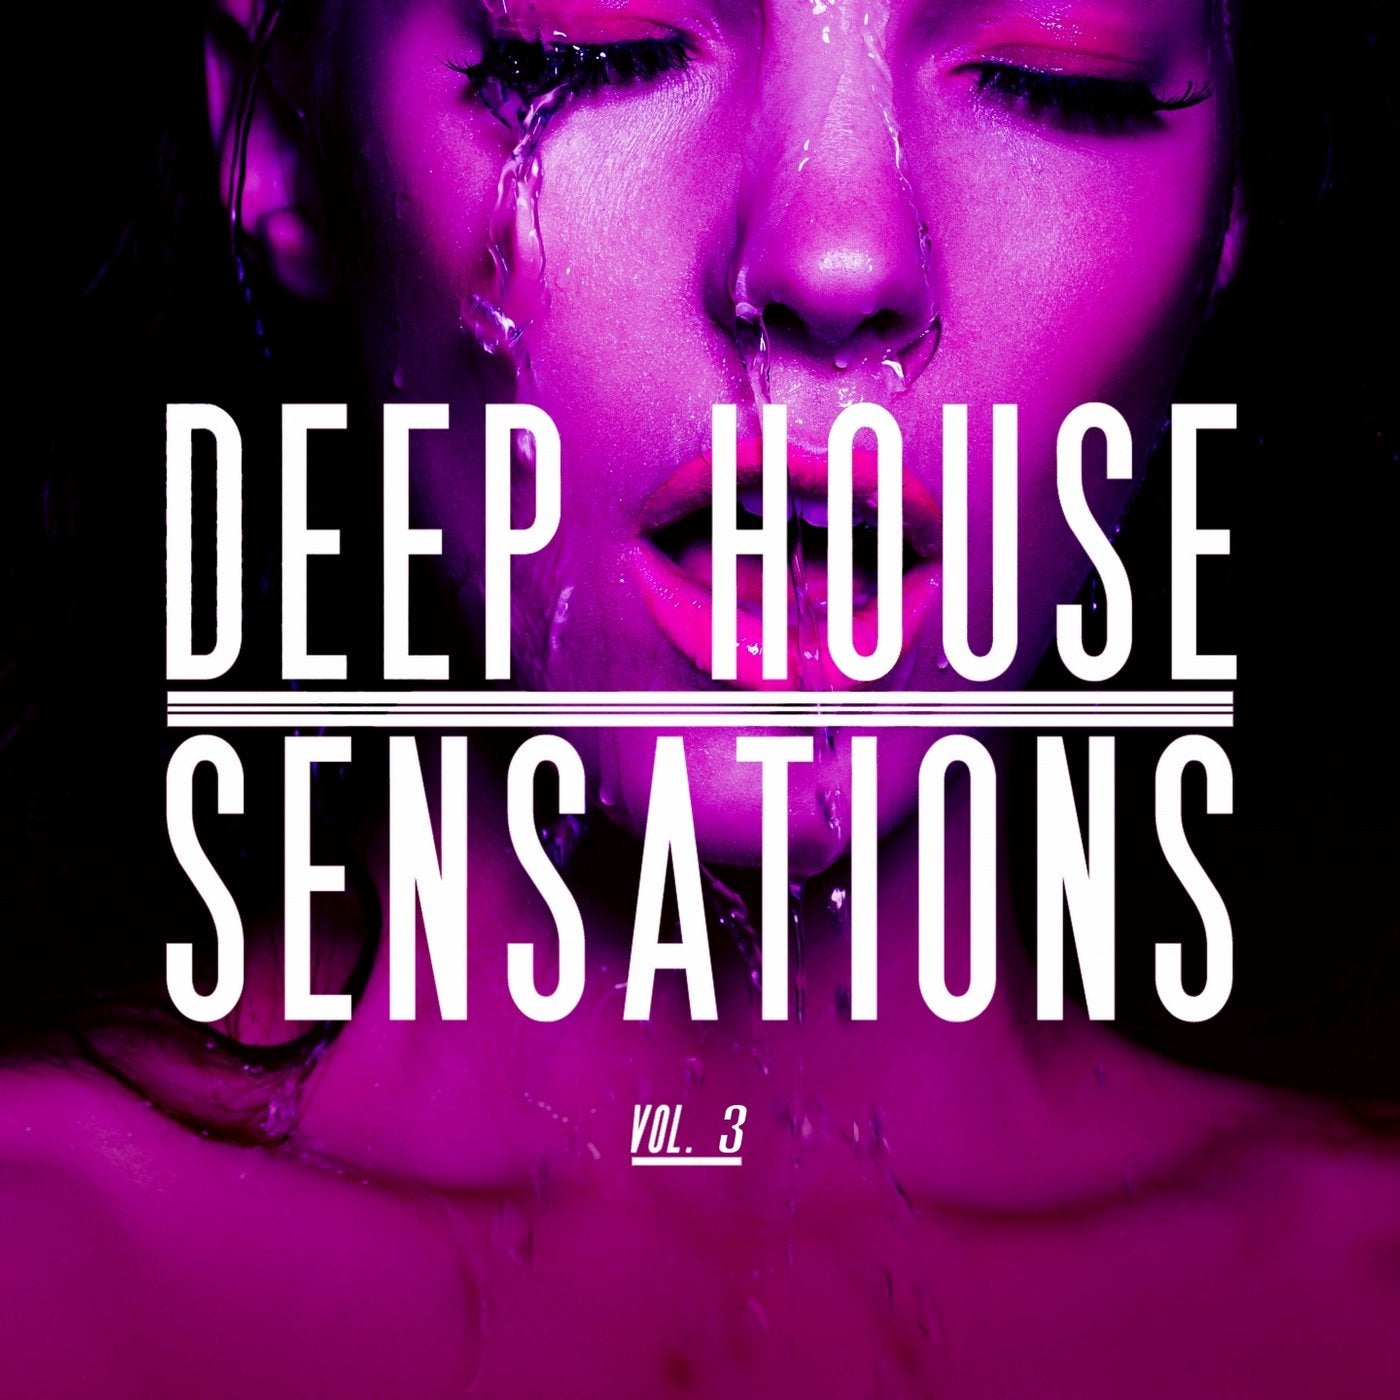 Deep House Sensations, Vol. 3